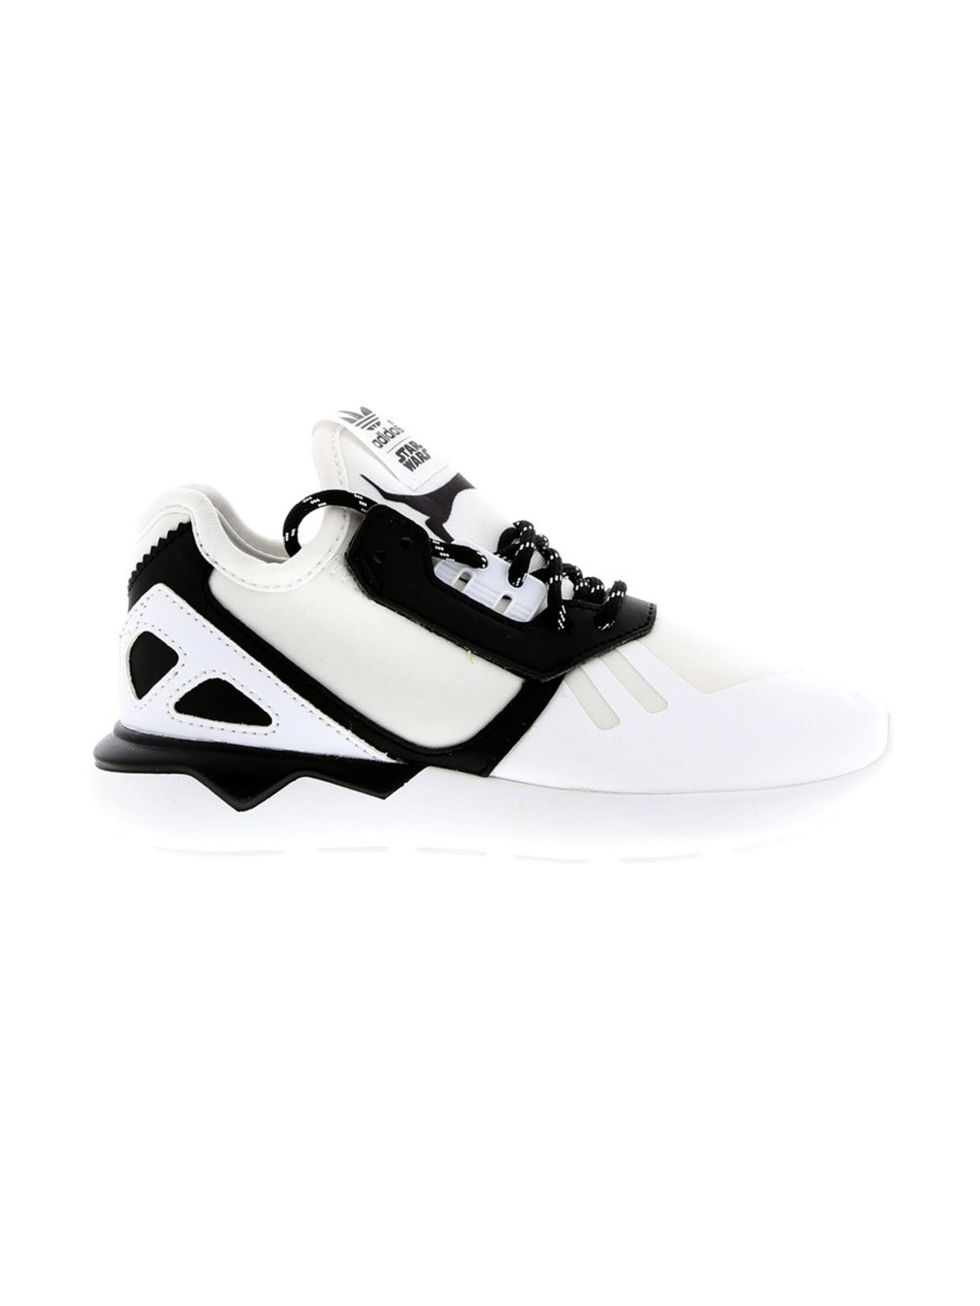 Shoe, White, Walking shoe, Silver, Skate shoe, Plimsoll shoe, 